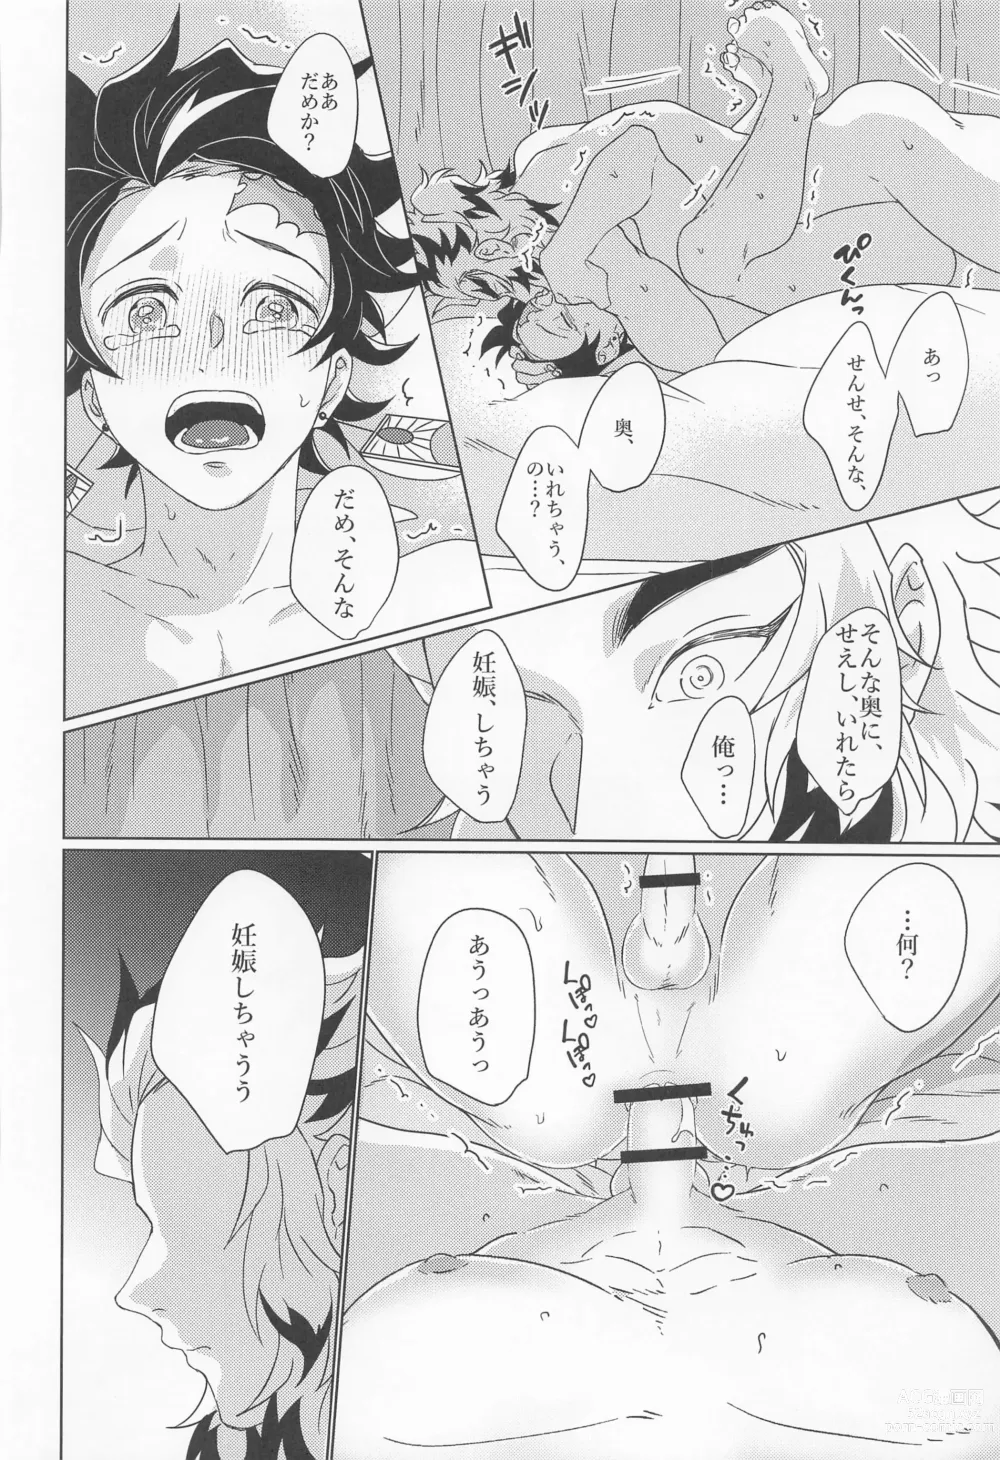 Page 61 of doujinshi Kagerou